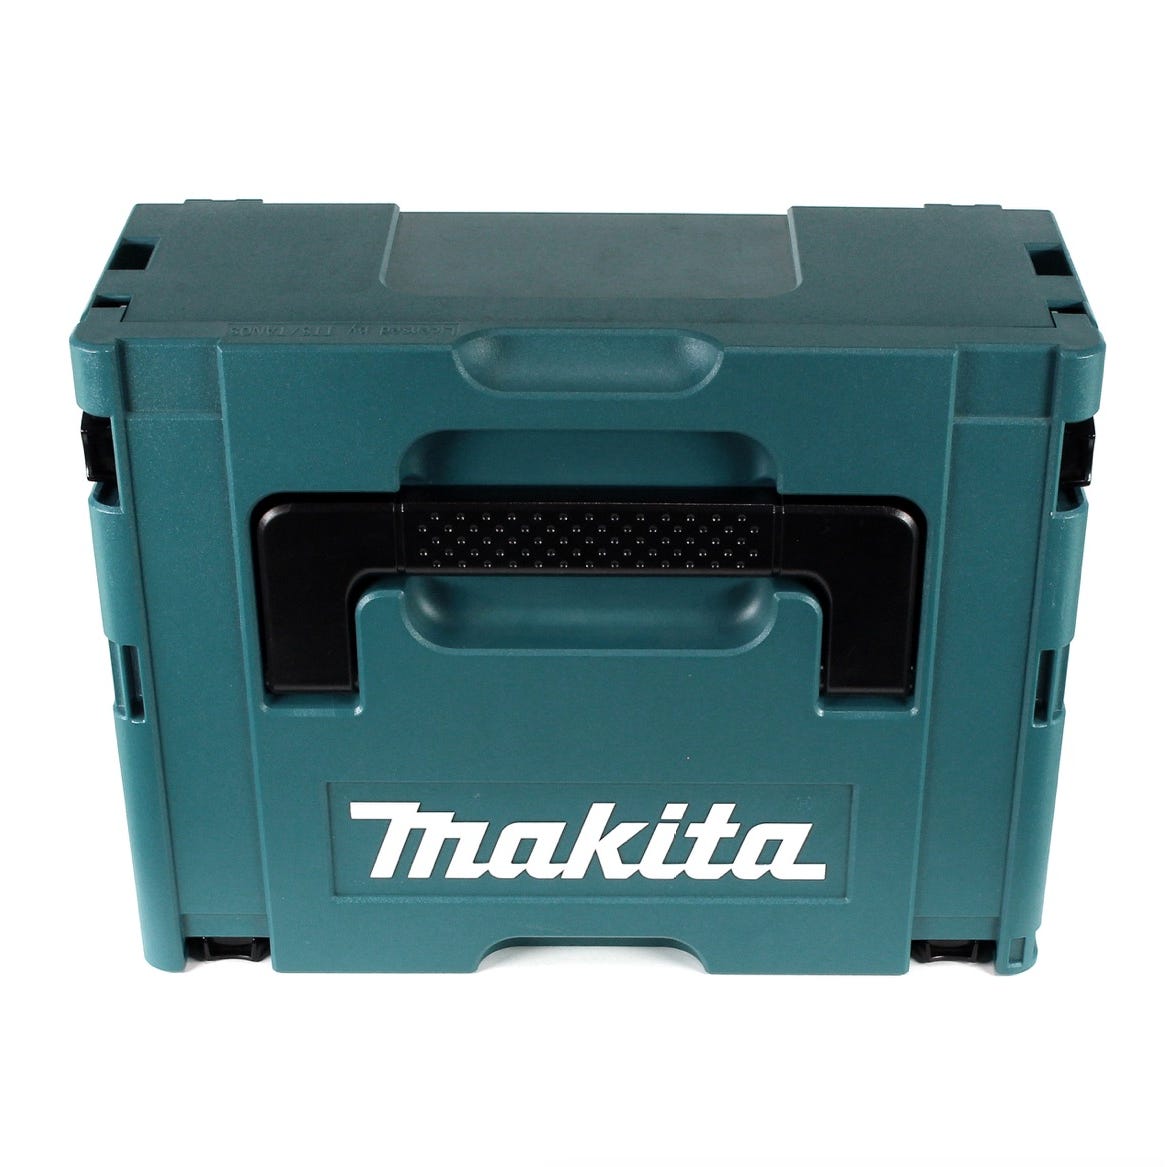 Makita DDF 485 RTJ 18 V Li-Ion Perceuse visseuse sans fil Brushless 13 mm + Coffret MakPac + 2 x Batteries 5,0 Ah + Chargeur 2